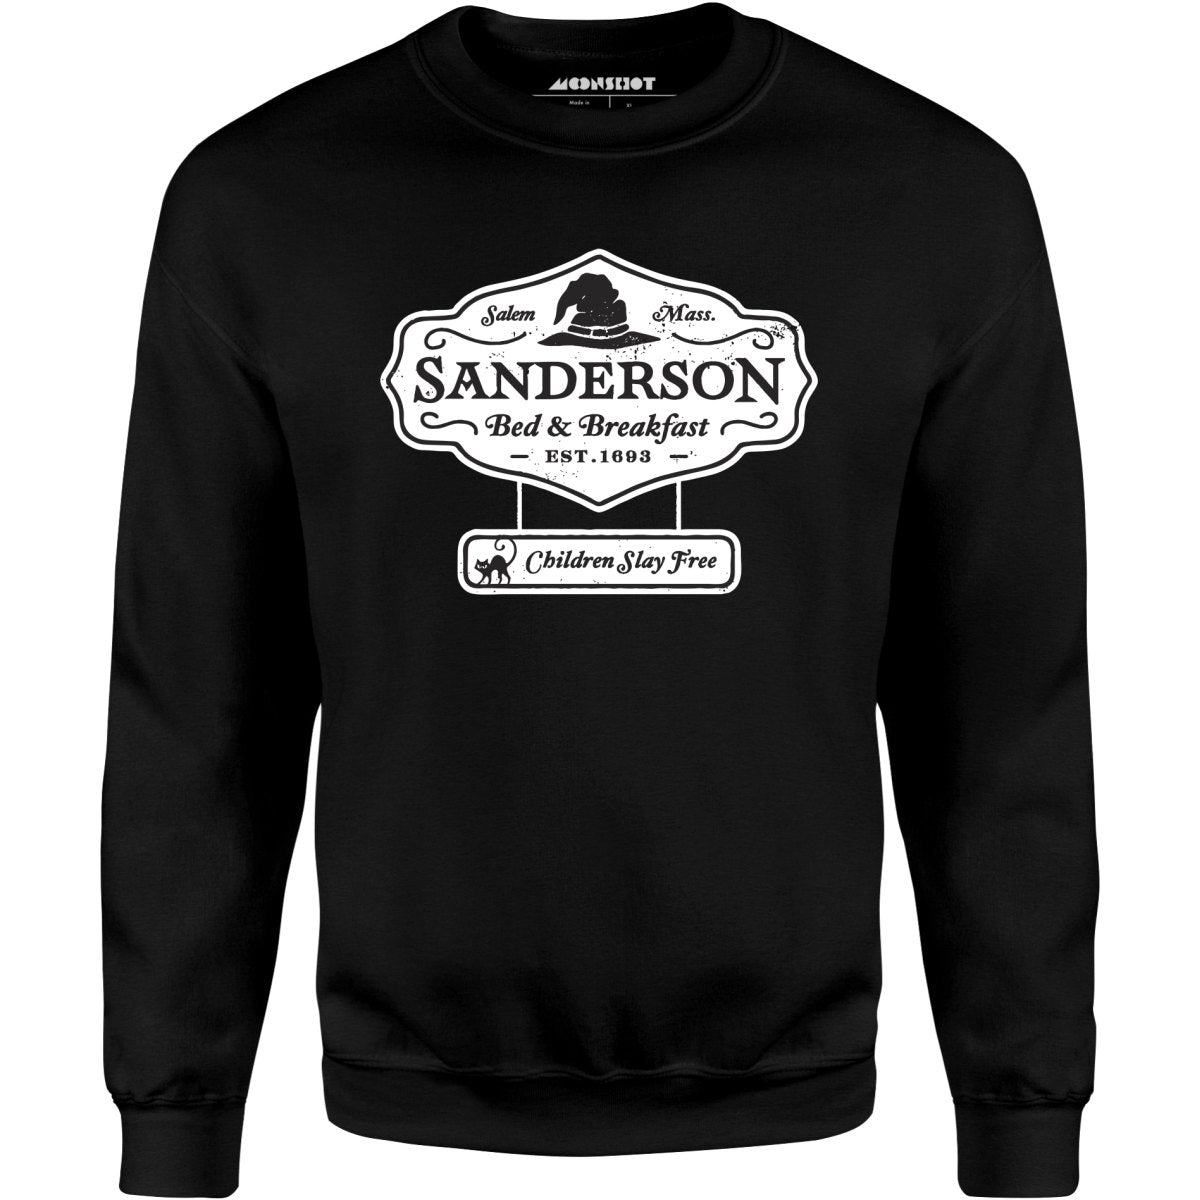 Sanderson Bed & Breakfast - Unisex Sweatshirt